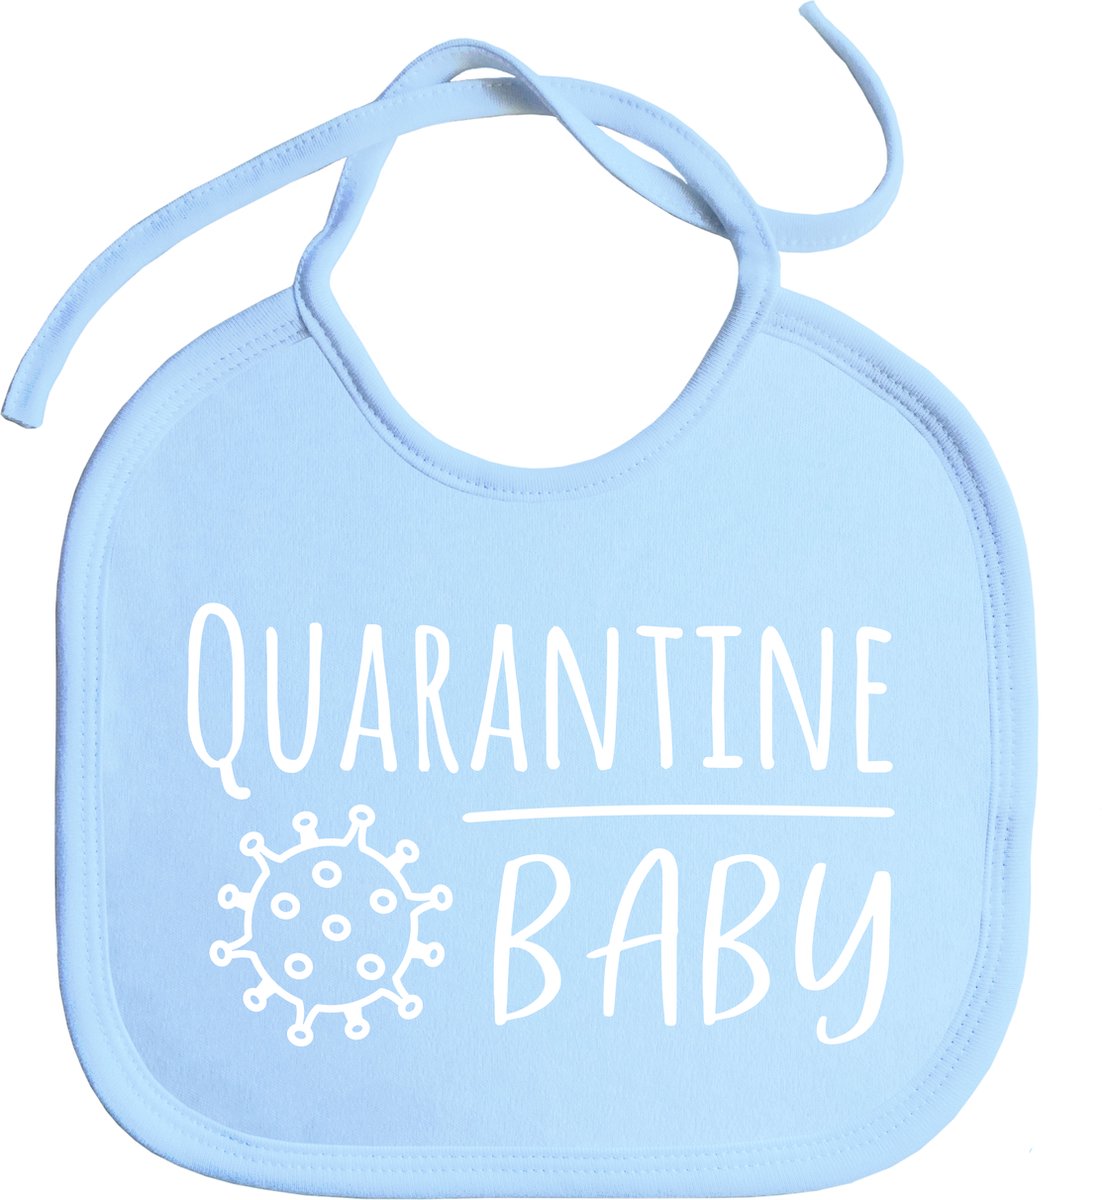 Slabbetjes - slabber - slab - baby - Quarantine baby - koordjes - stuks 1 - baby blauw